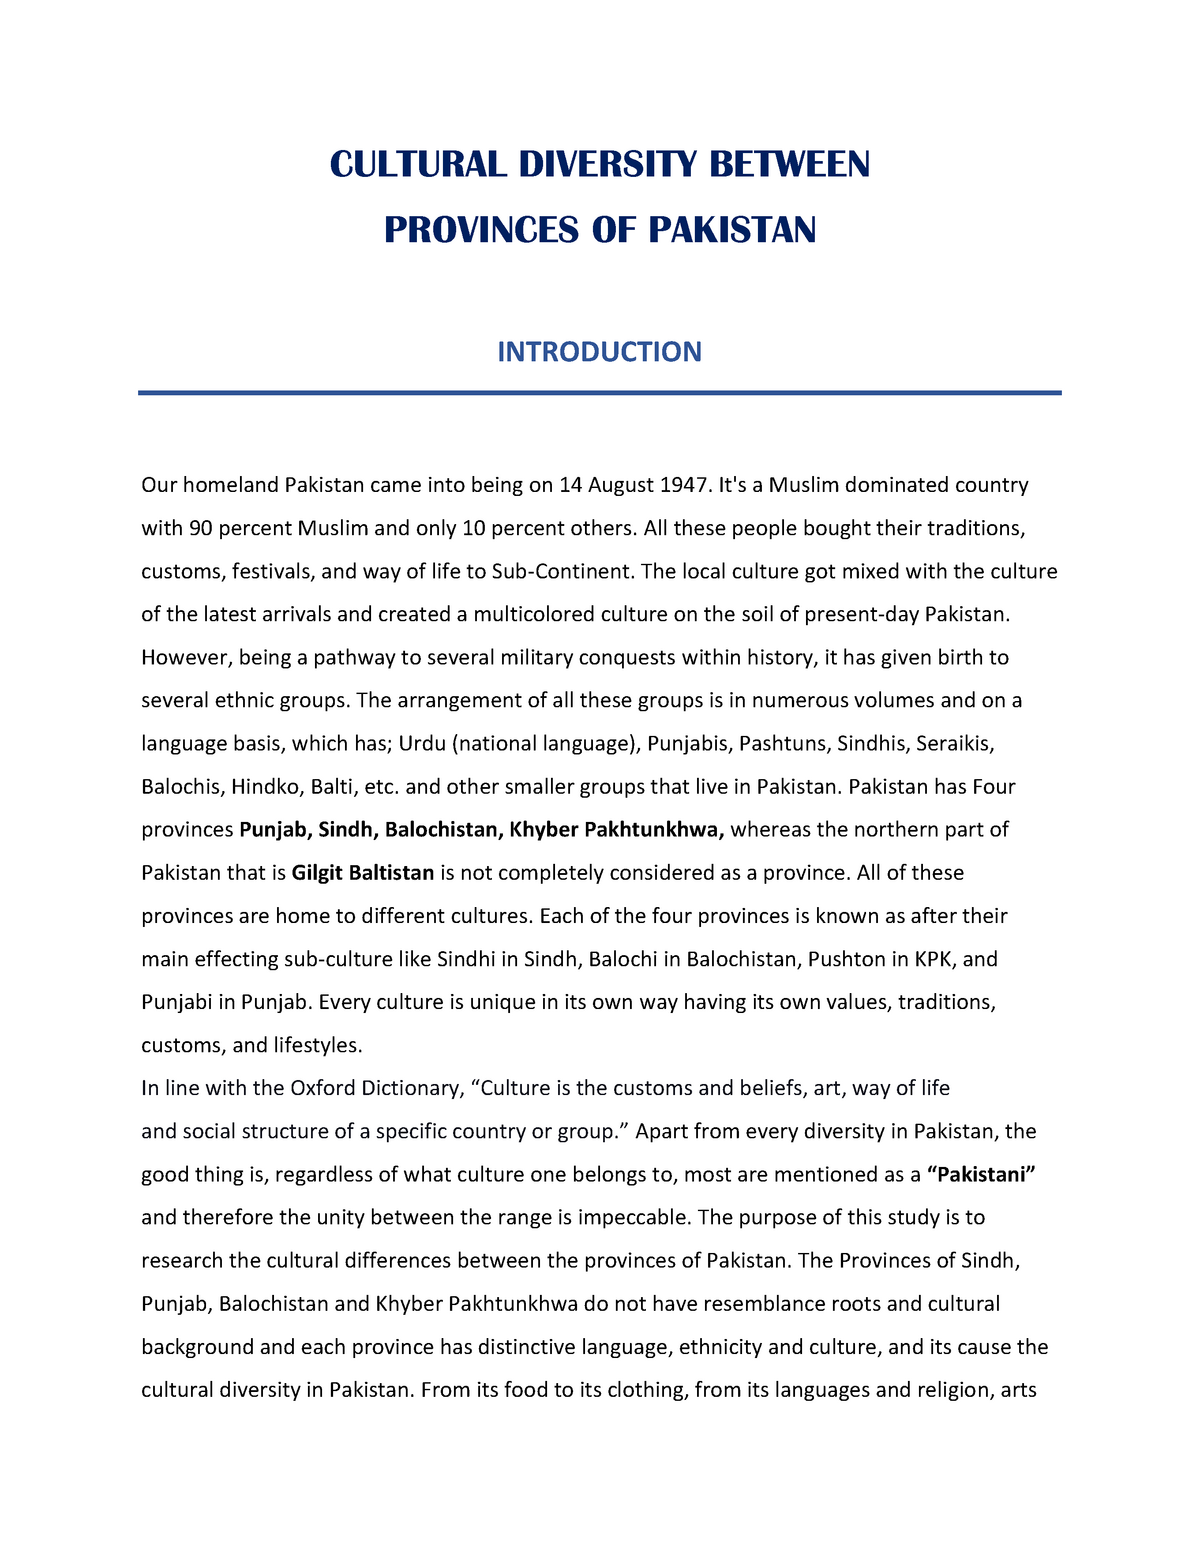 diversity of pakistan essay